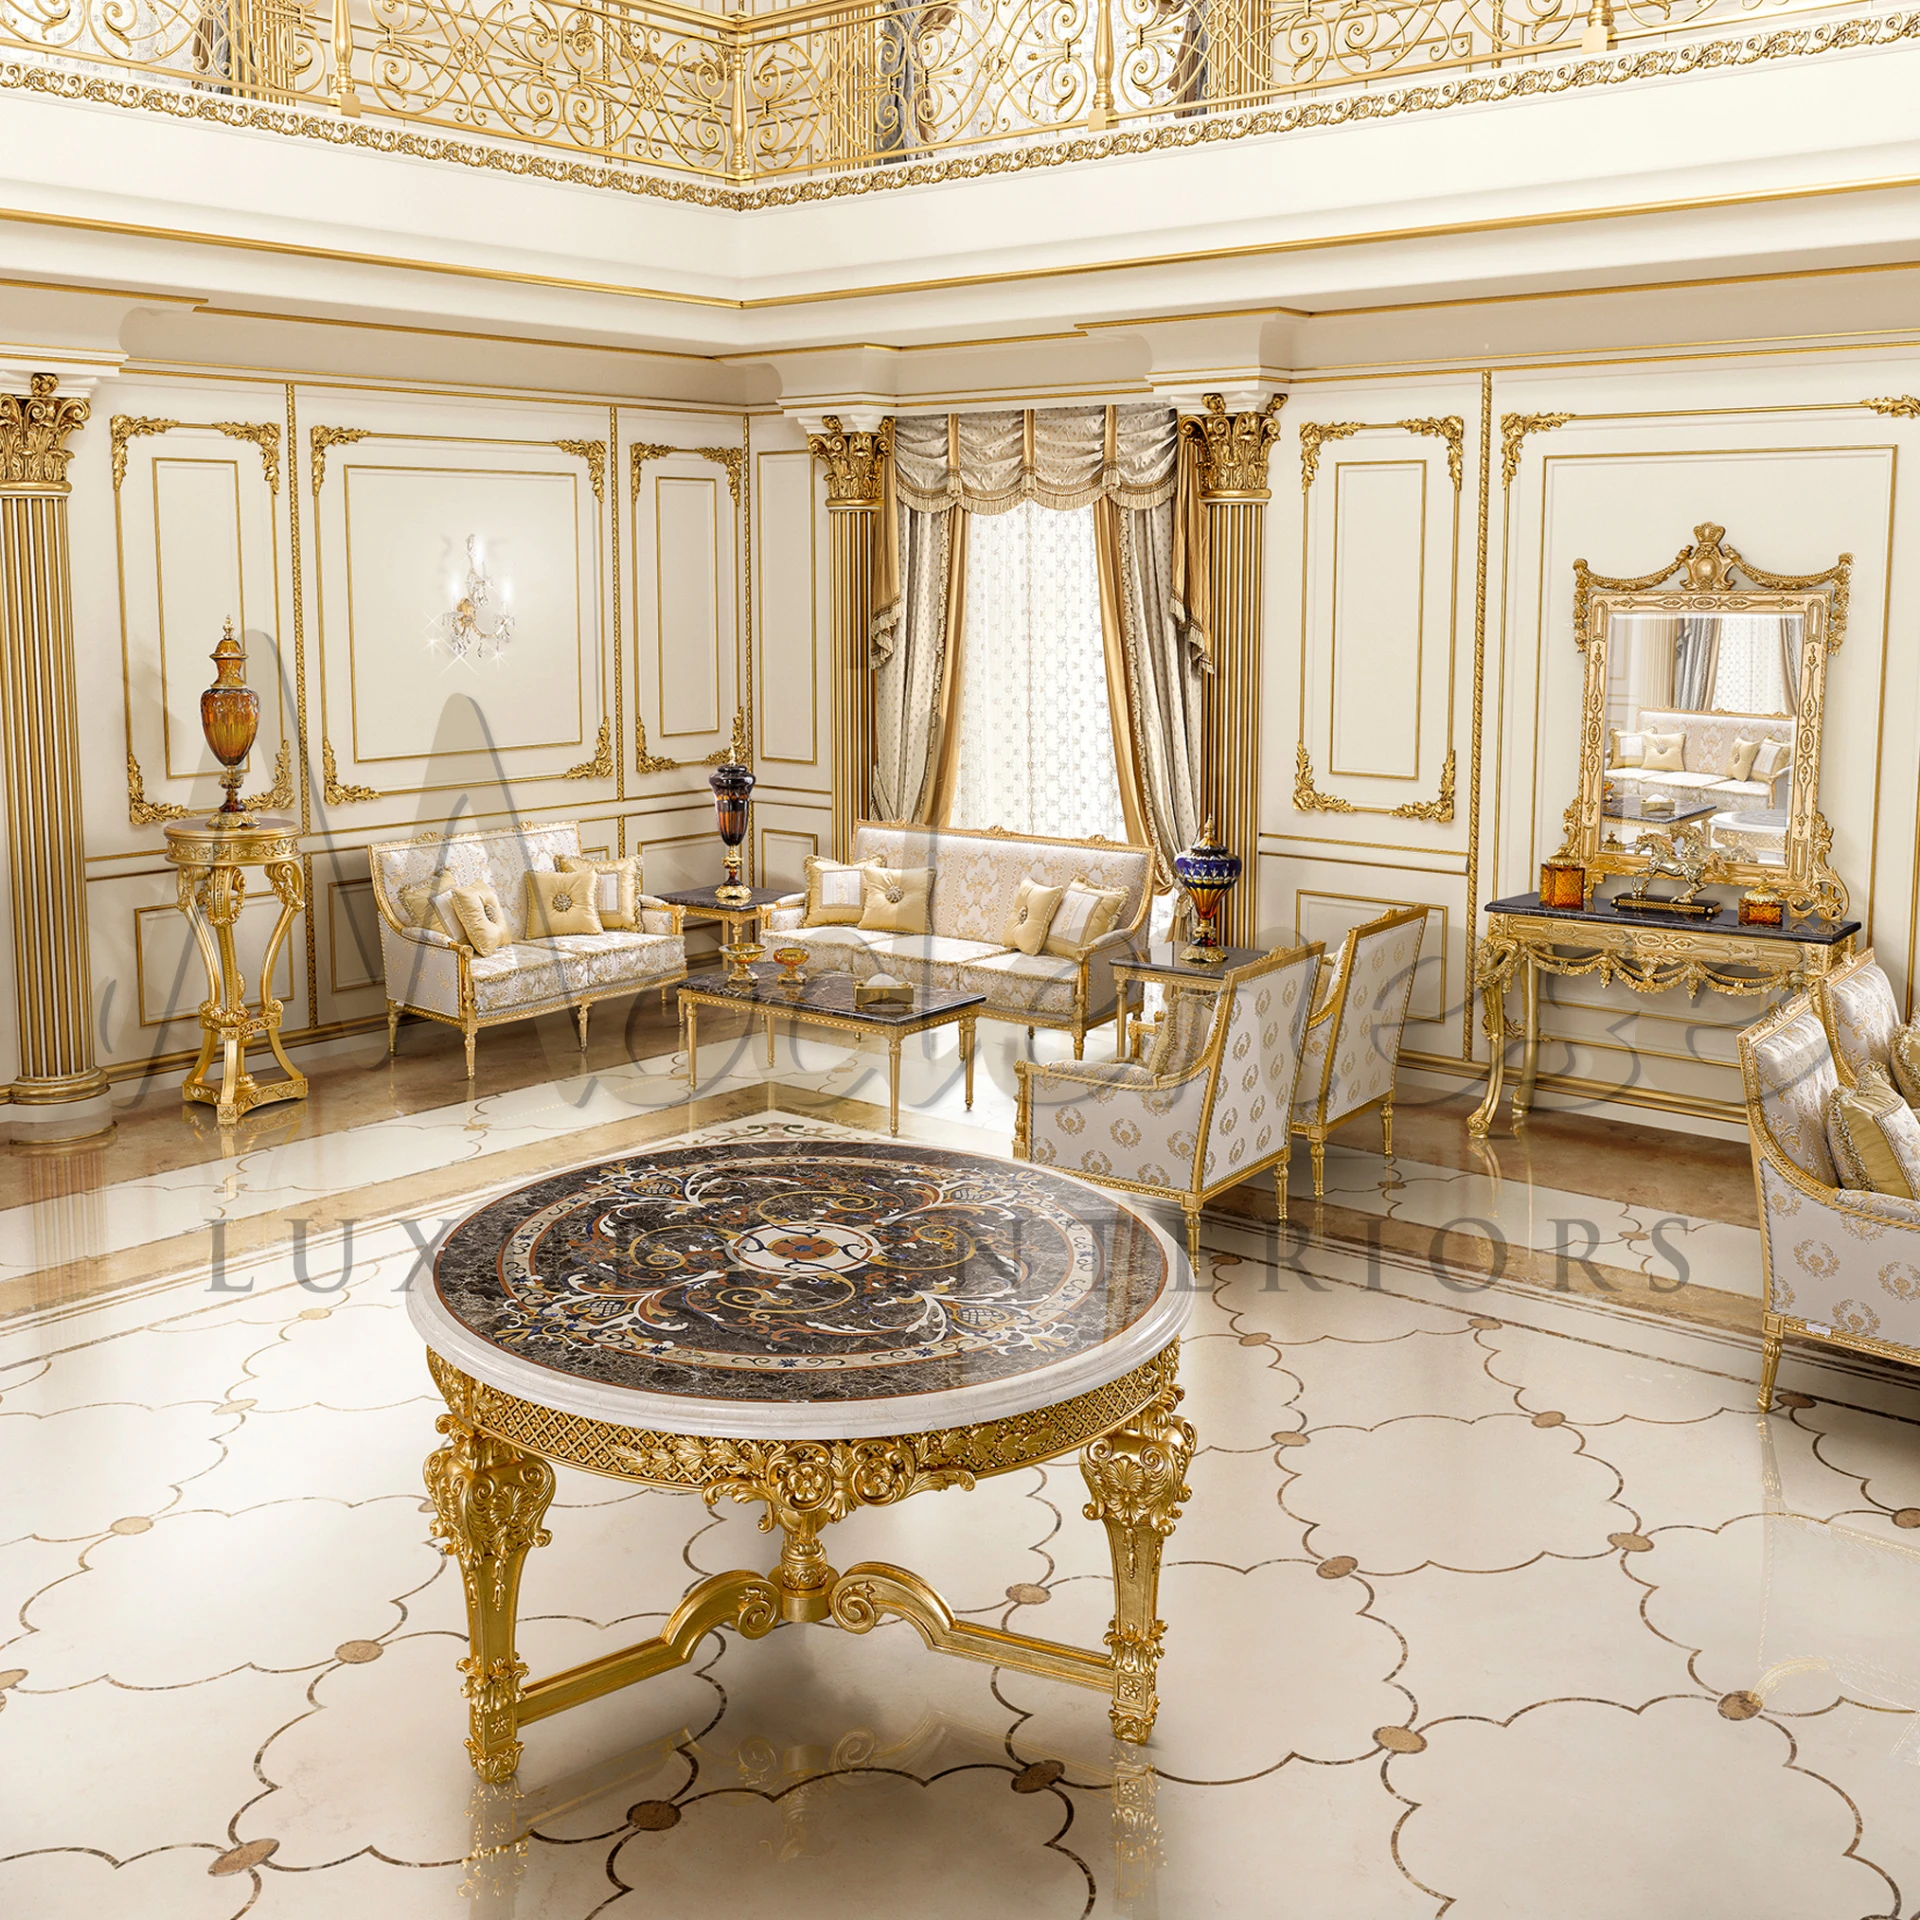 Opulent Emperador Dark Console, showcasing Modenese's skilled artisans' expertise in luxury furniture crafting.